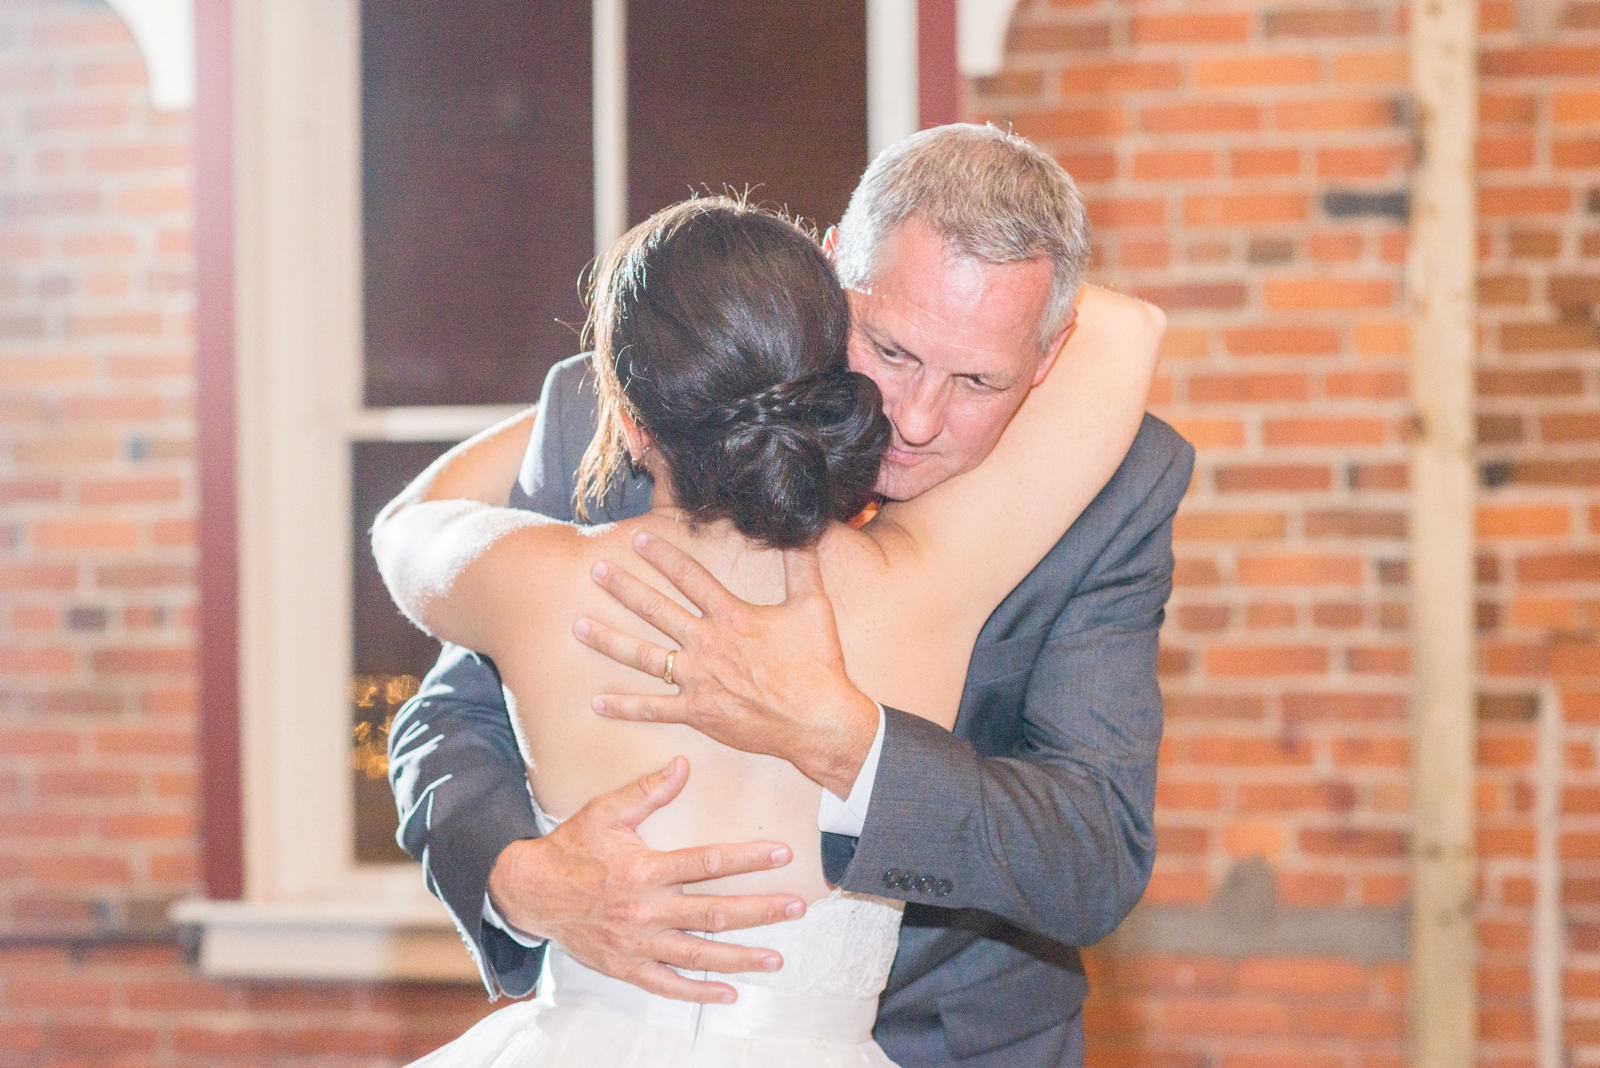 dad-hugging-his-daughter-after-dancing